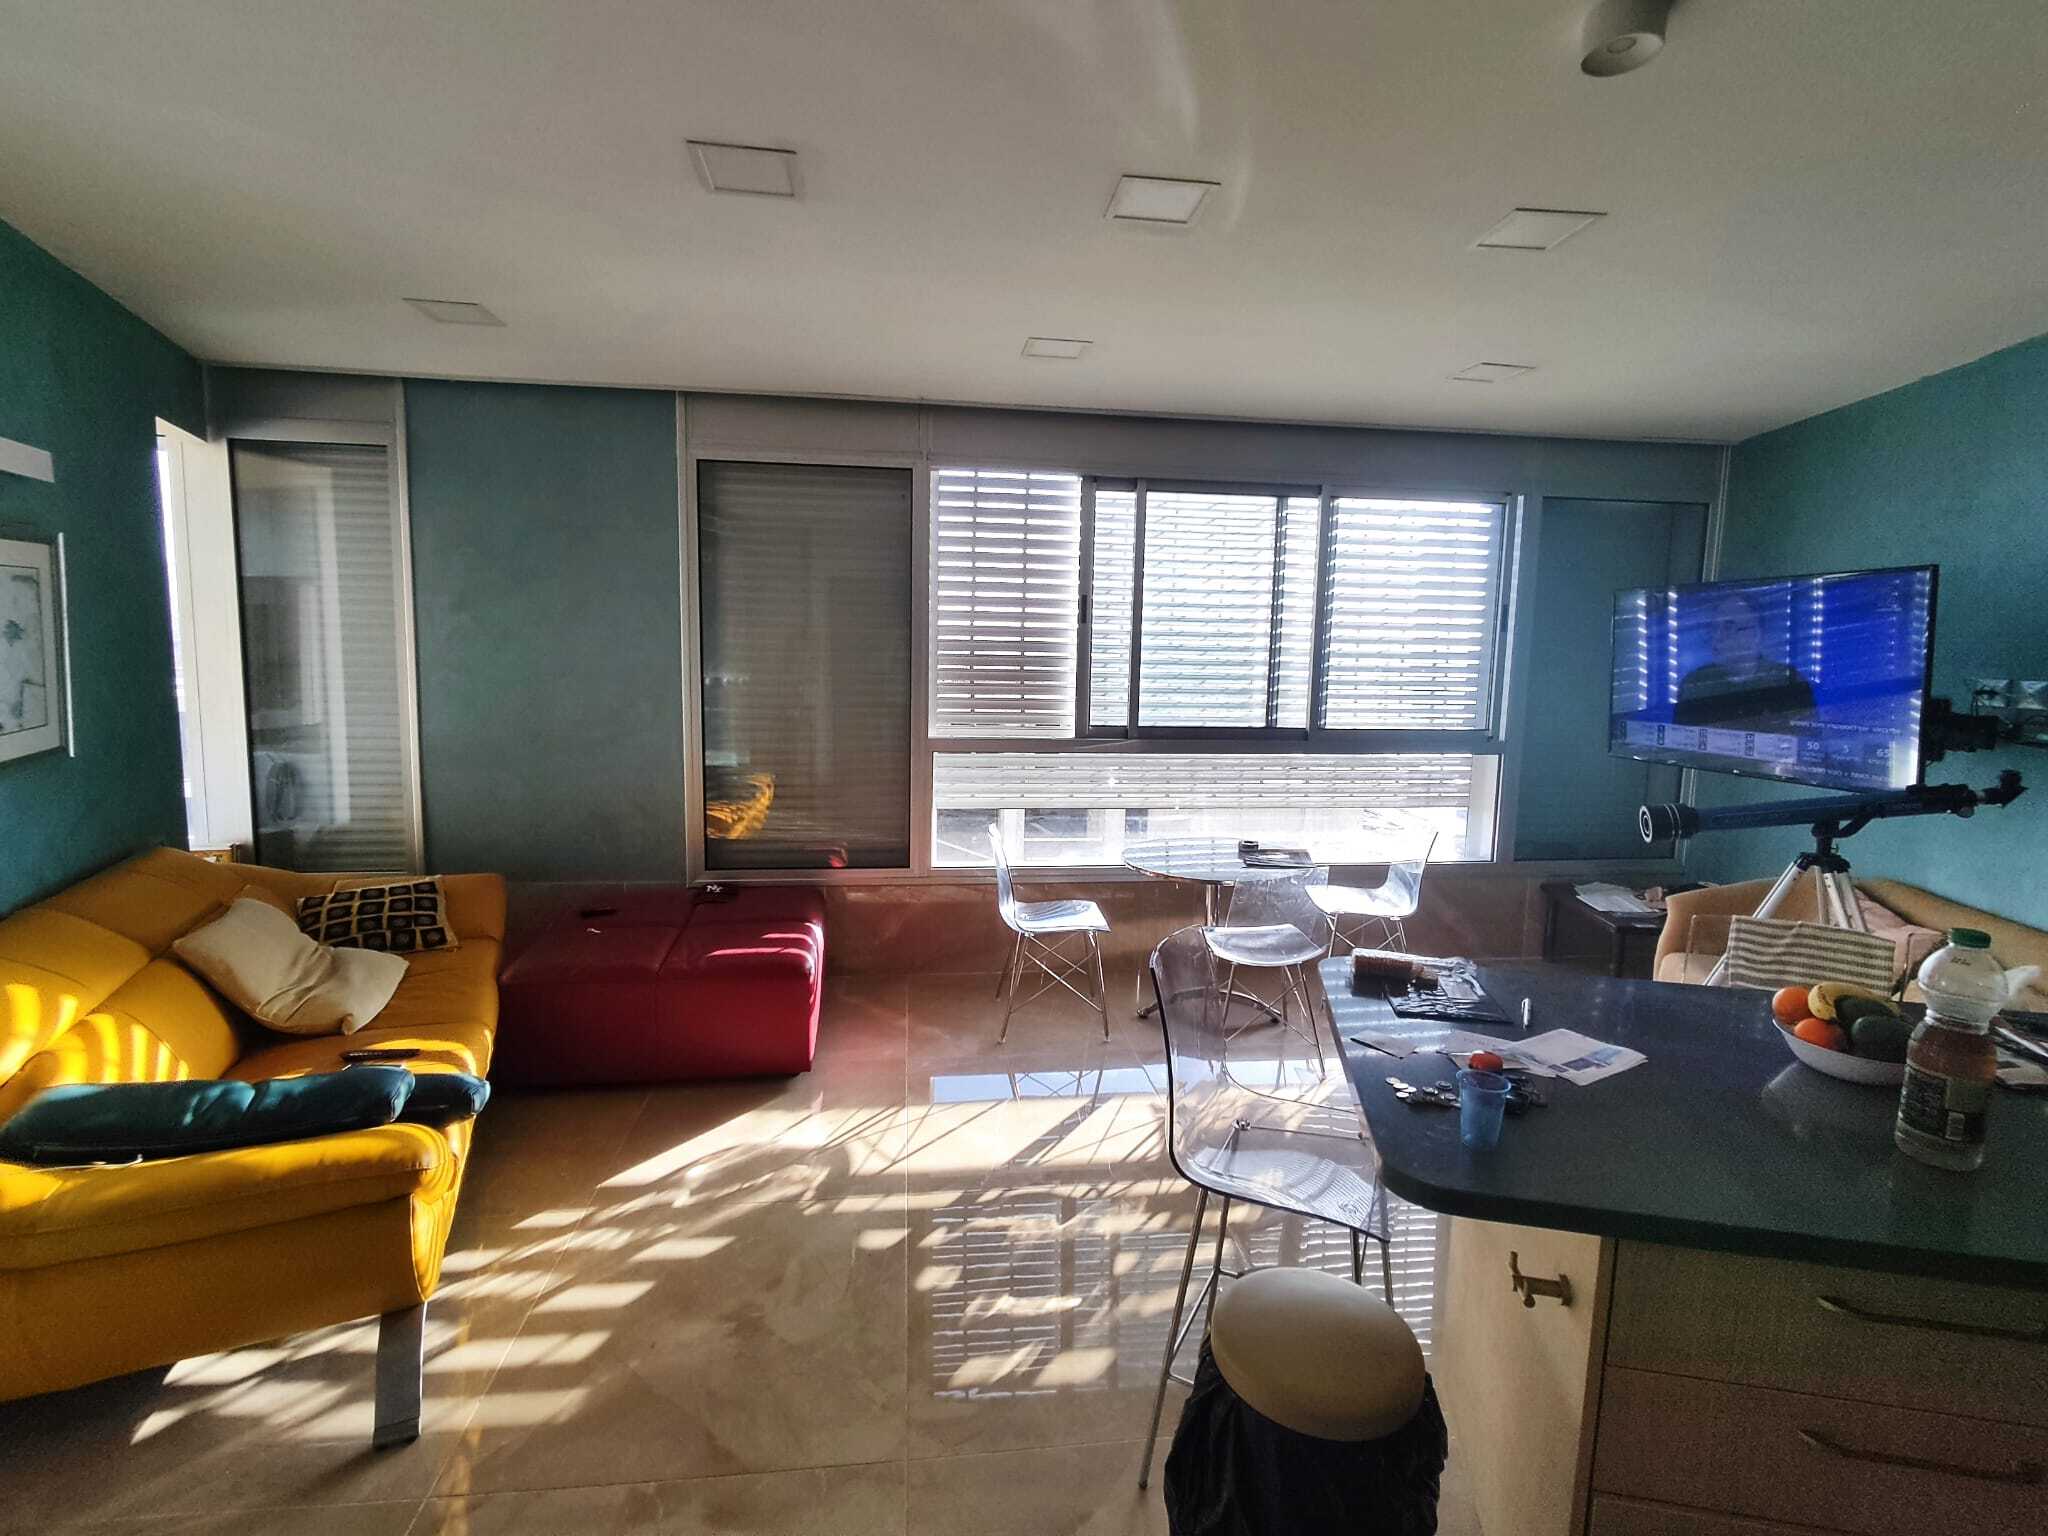 Аренда: Квартира 3 комн. 5,500₪ в месяц, Тель-Авив